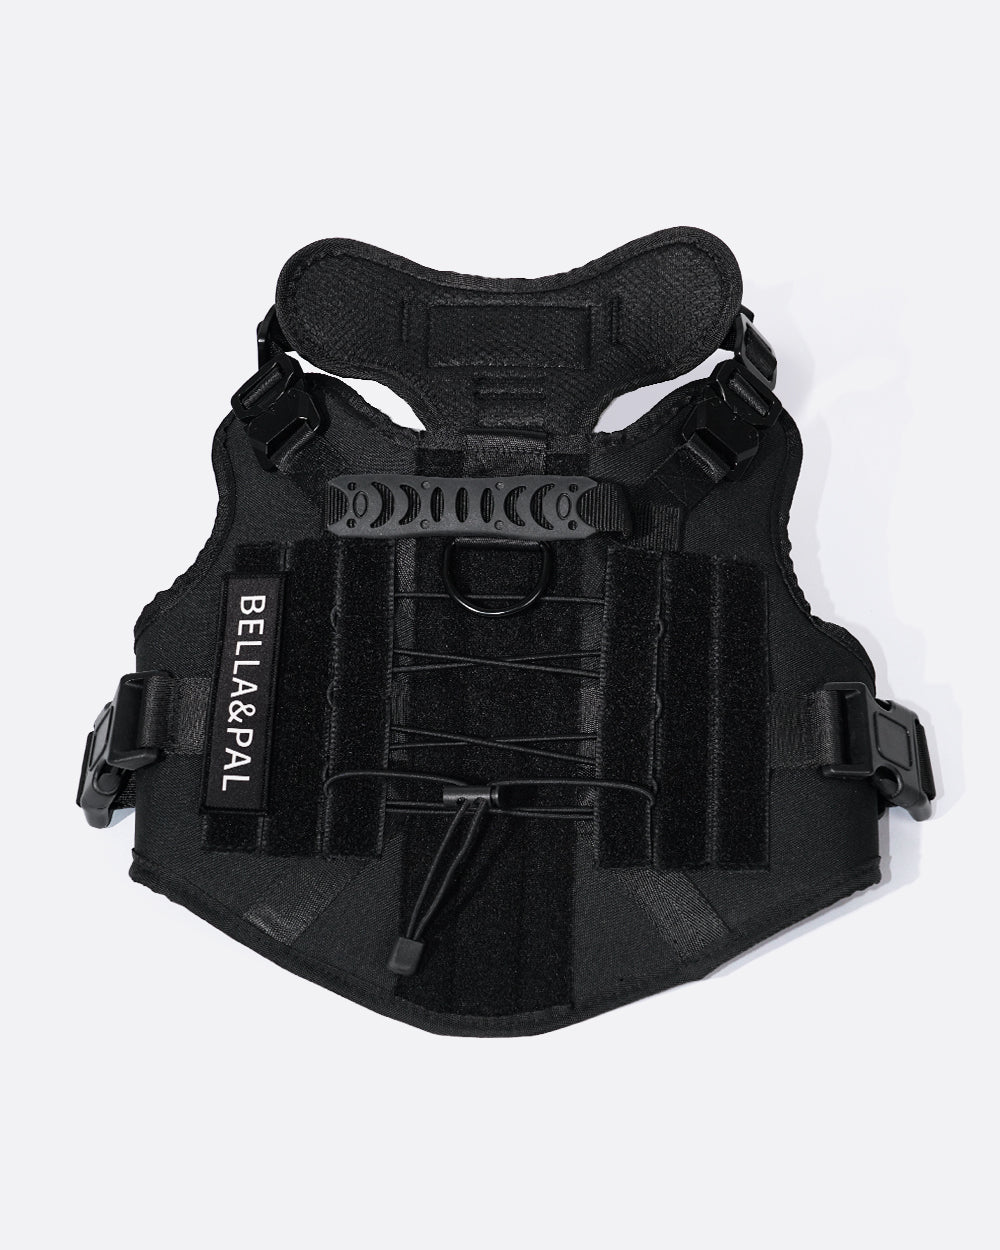 Heavy Duty Tactical No Pull Dog Harness - Classic Black